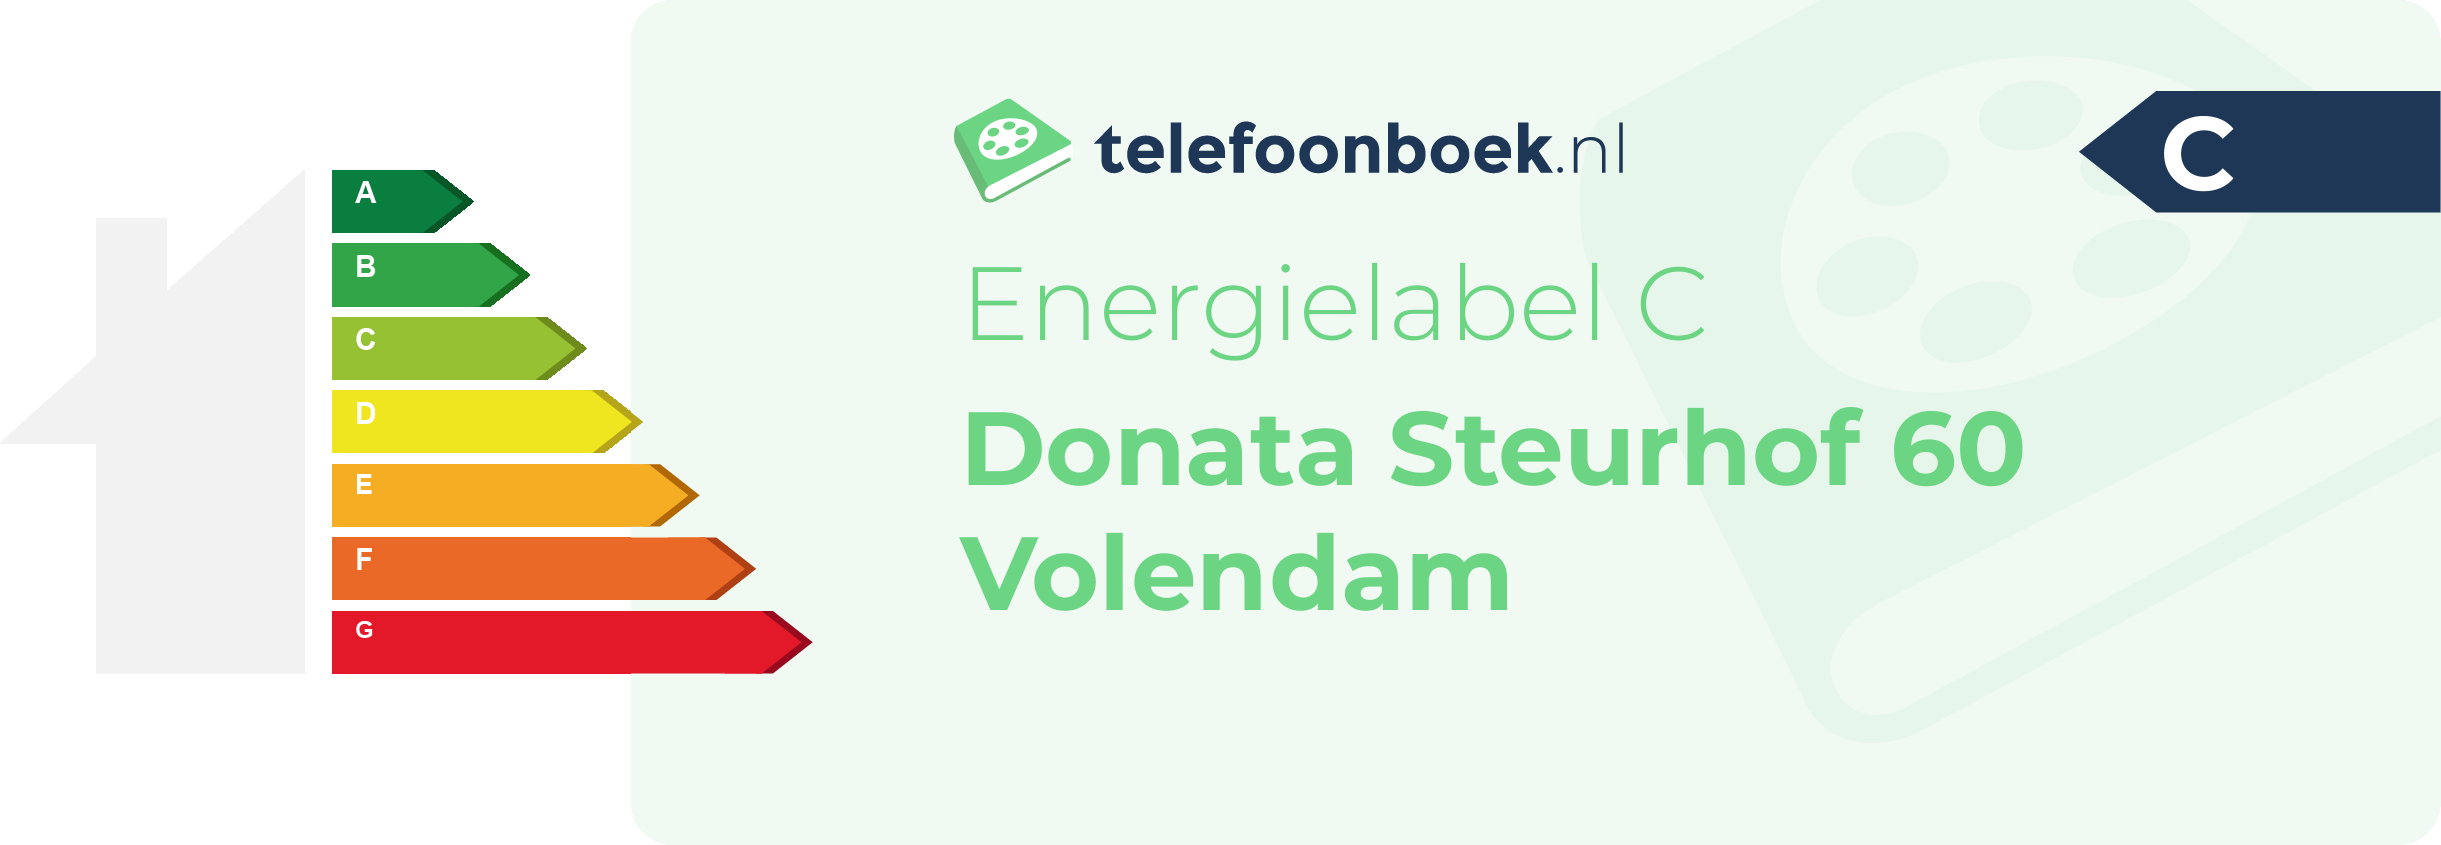 Energielabel Donata Steurhof 60 Volendam